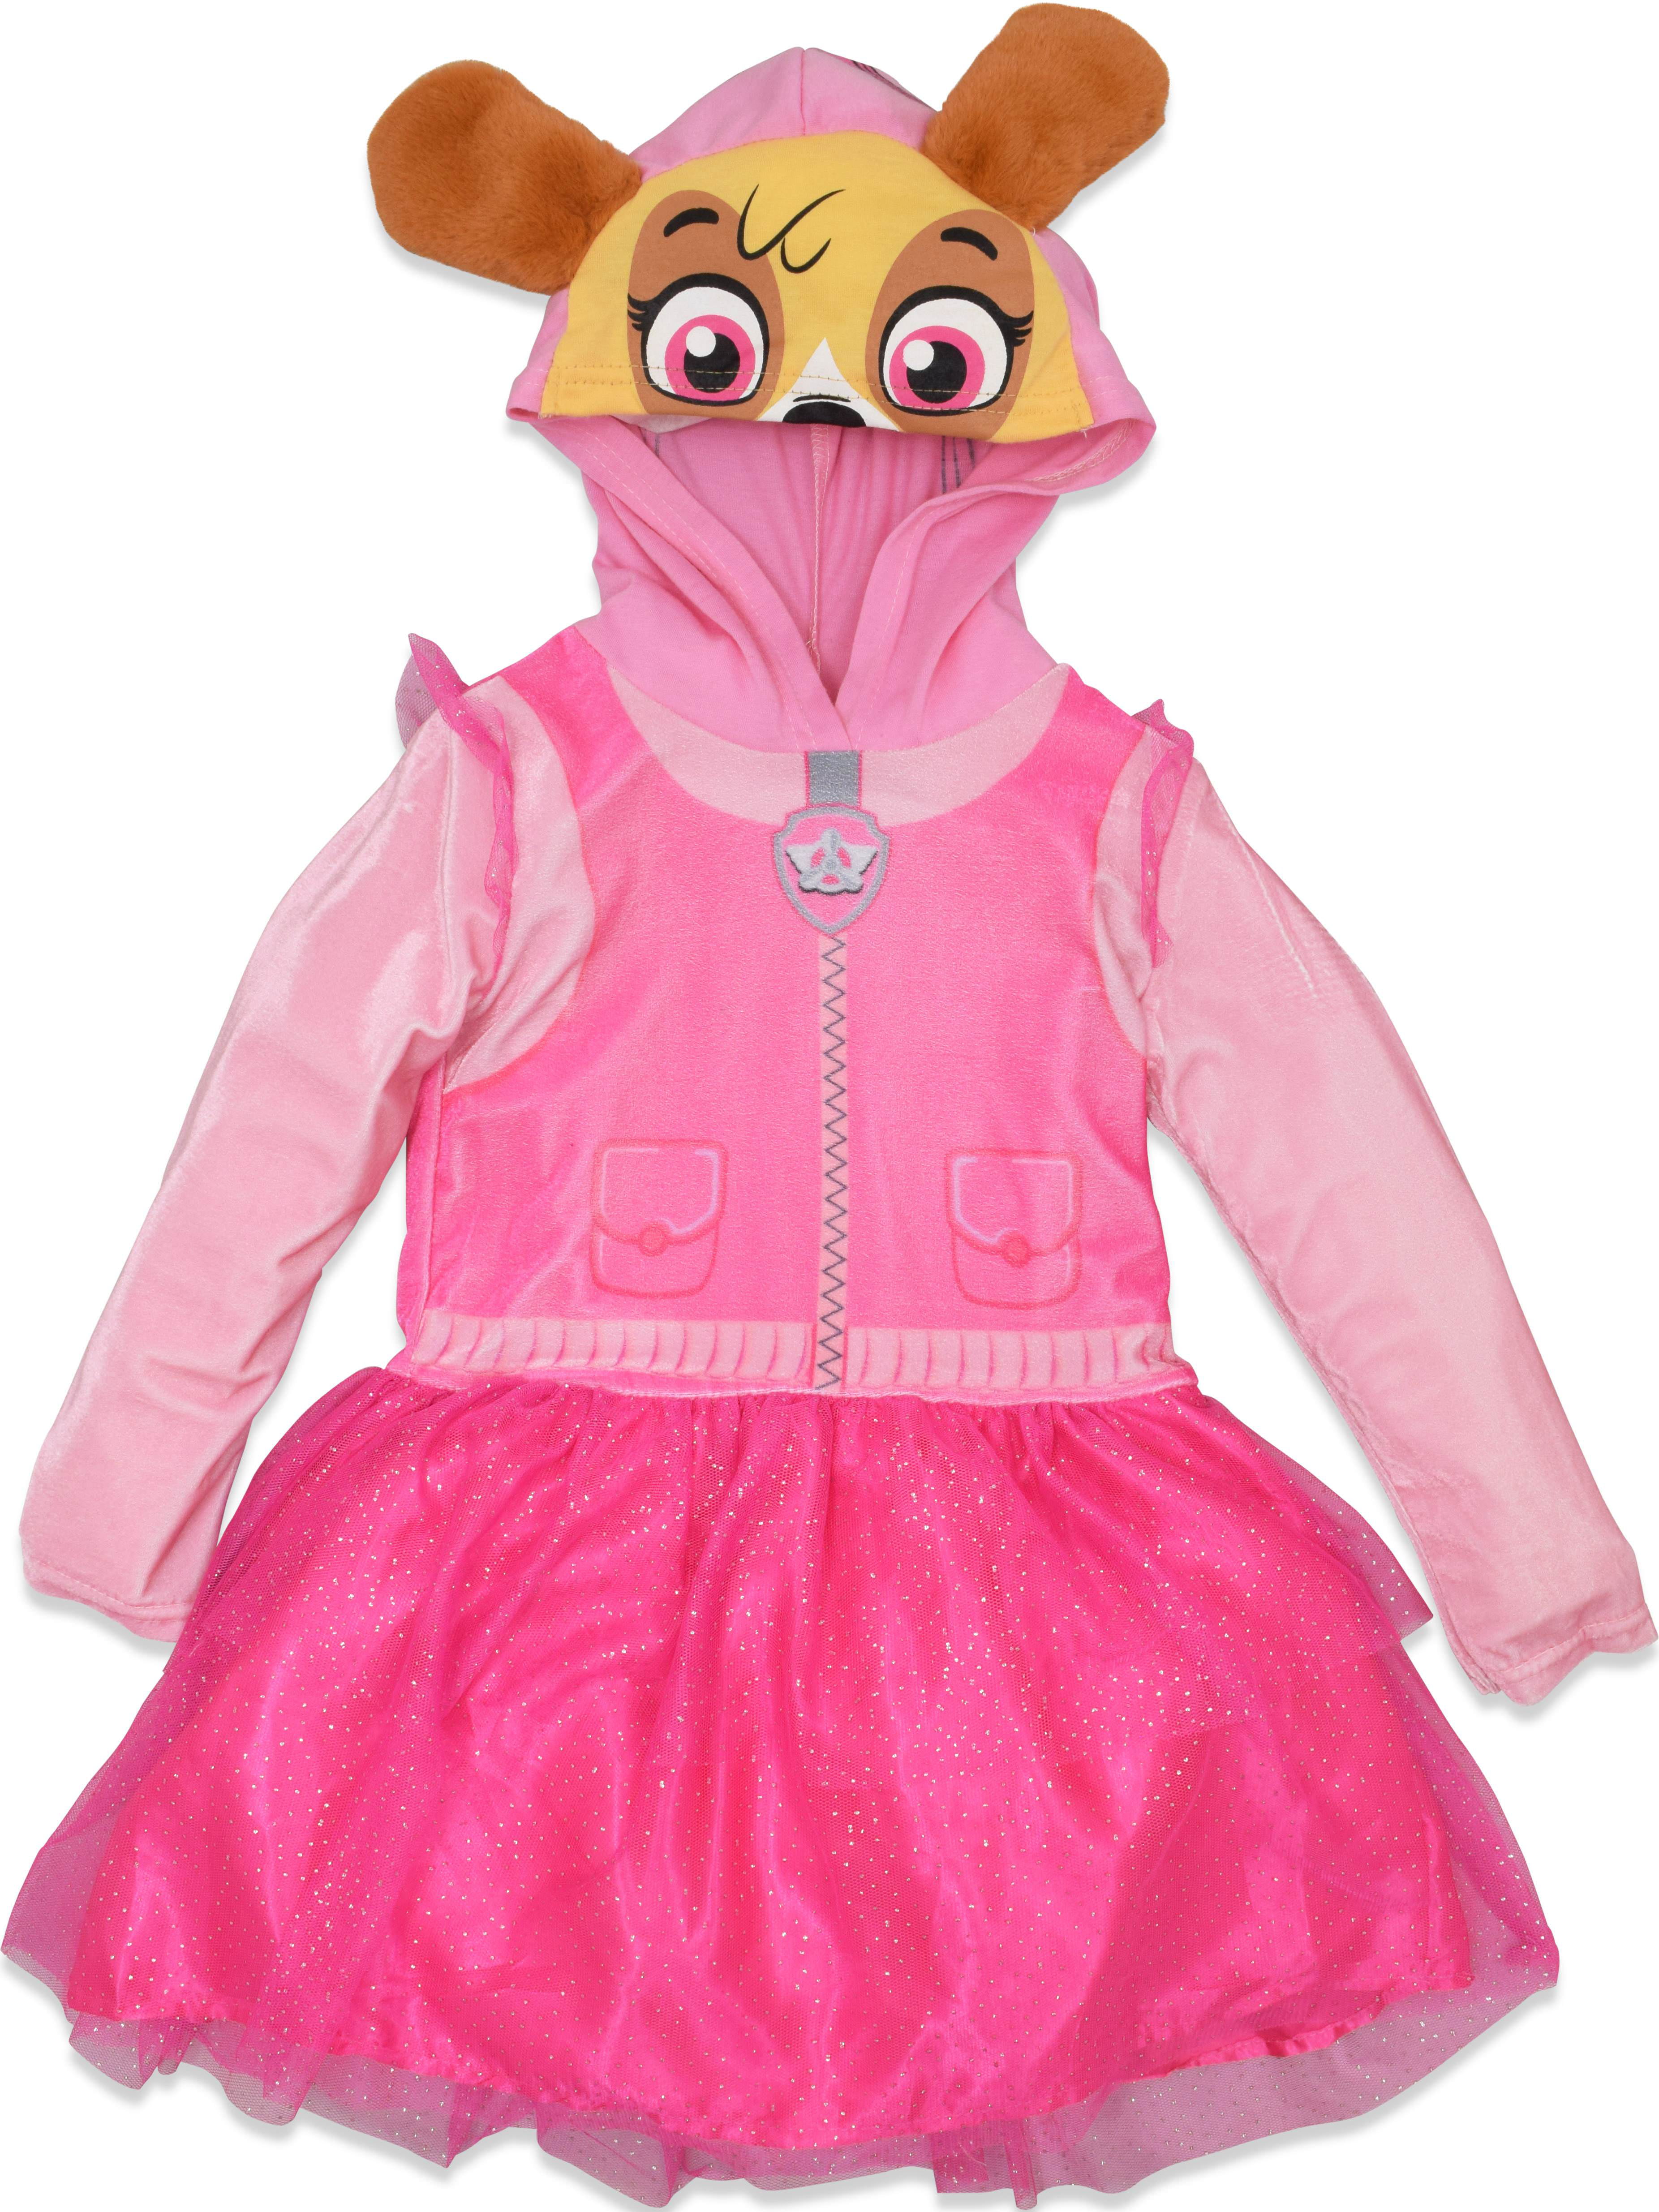 Paw Patrol Skye Girls Pink TuTu Party Dress Costume & Headband Set